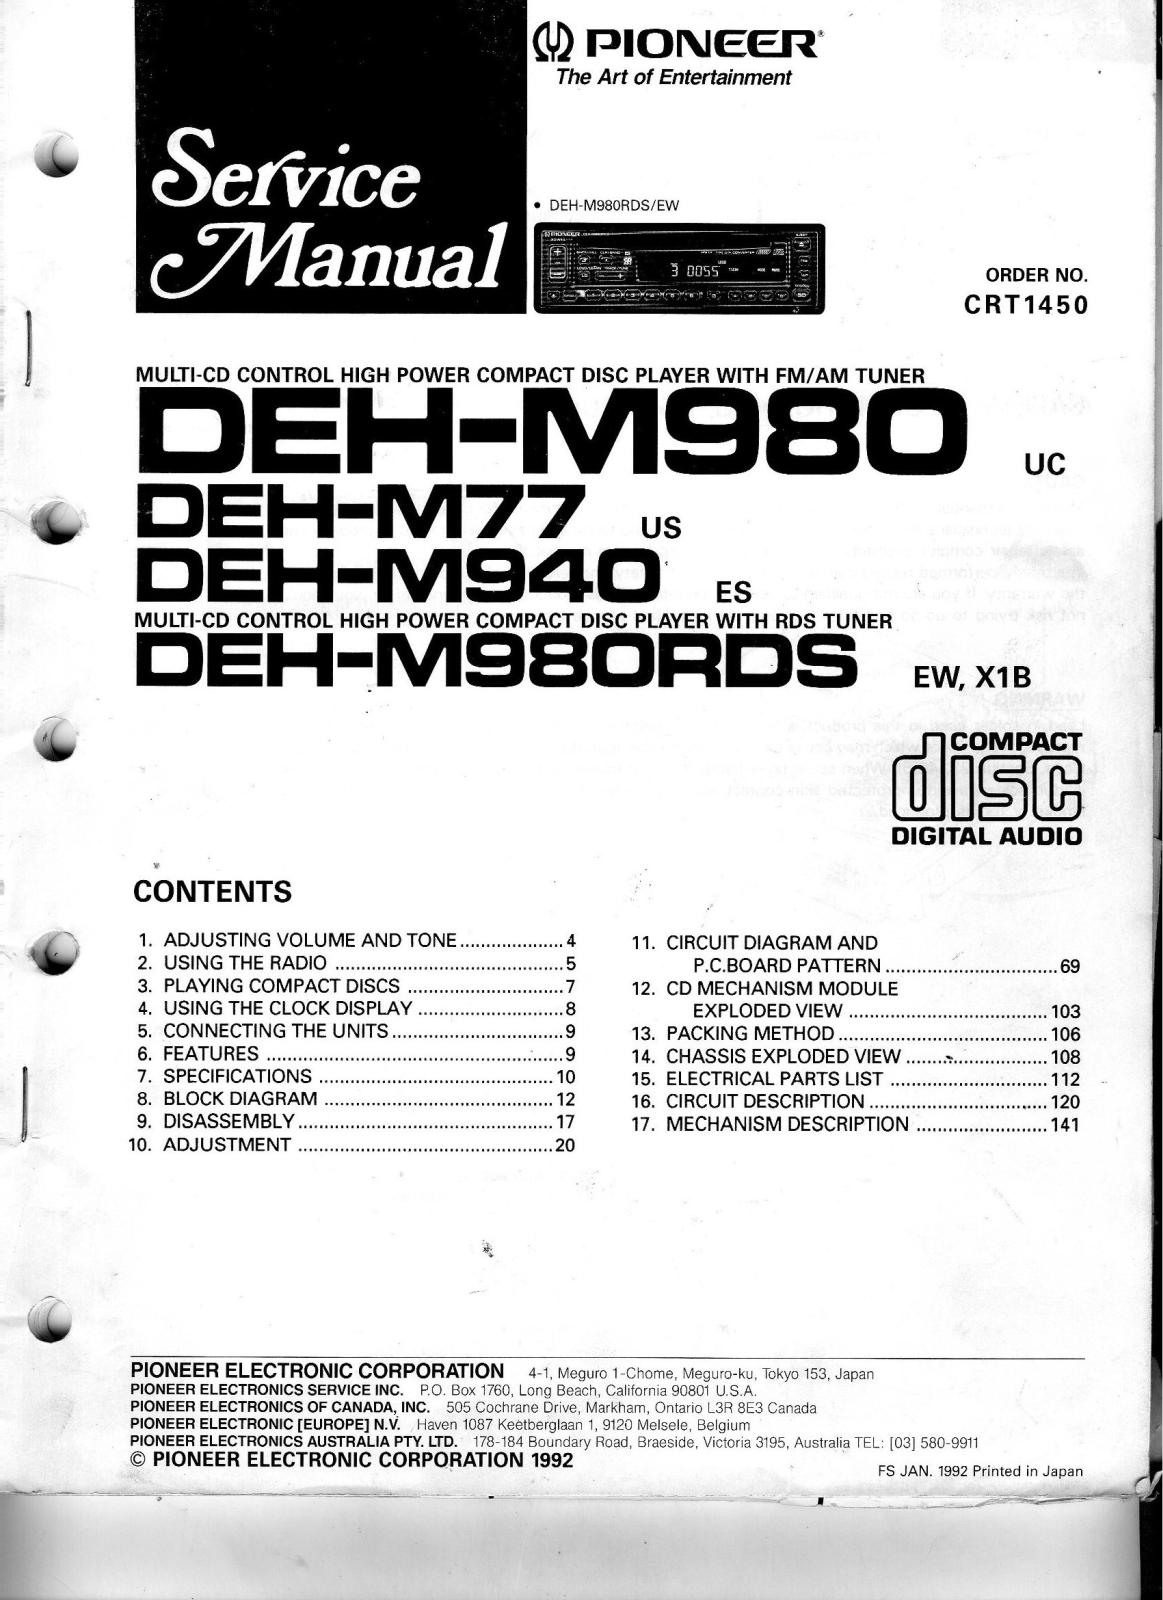 Pioneer DEH-M980, DEH-M77, DEH-M940 Service Manual